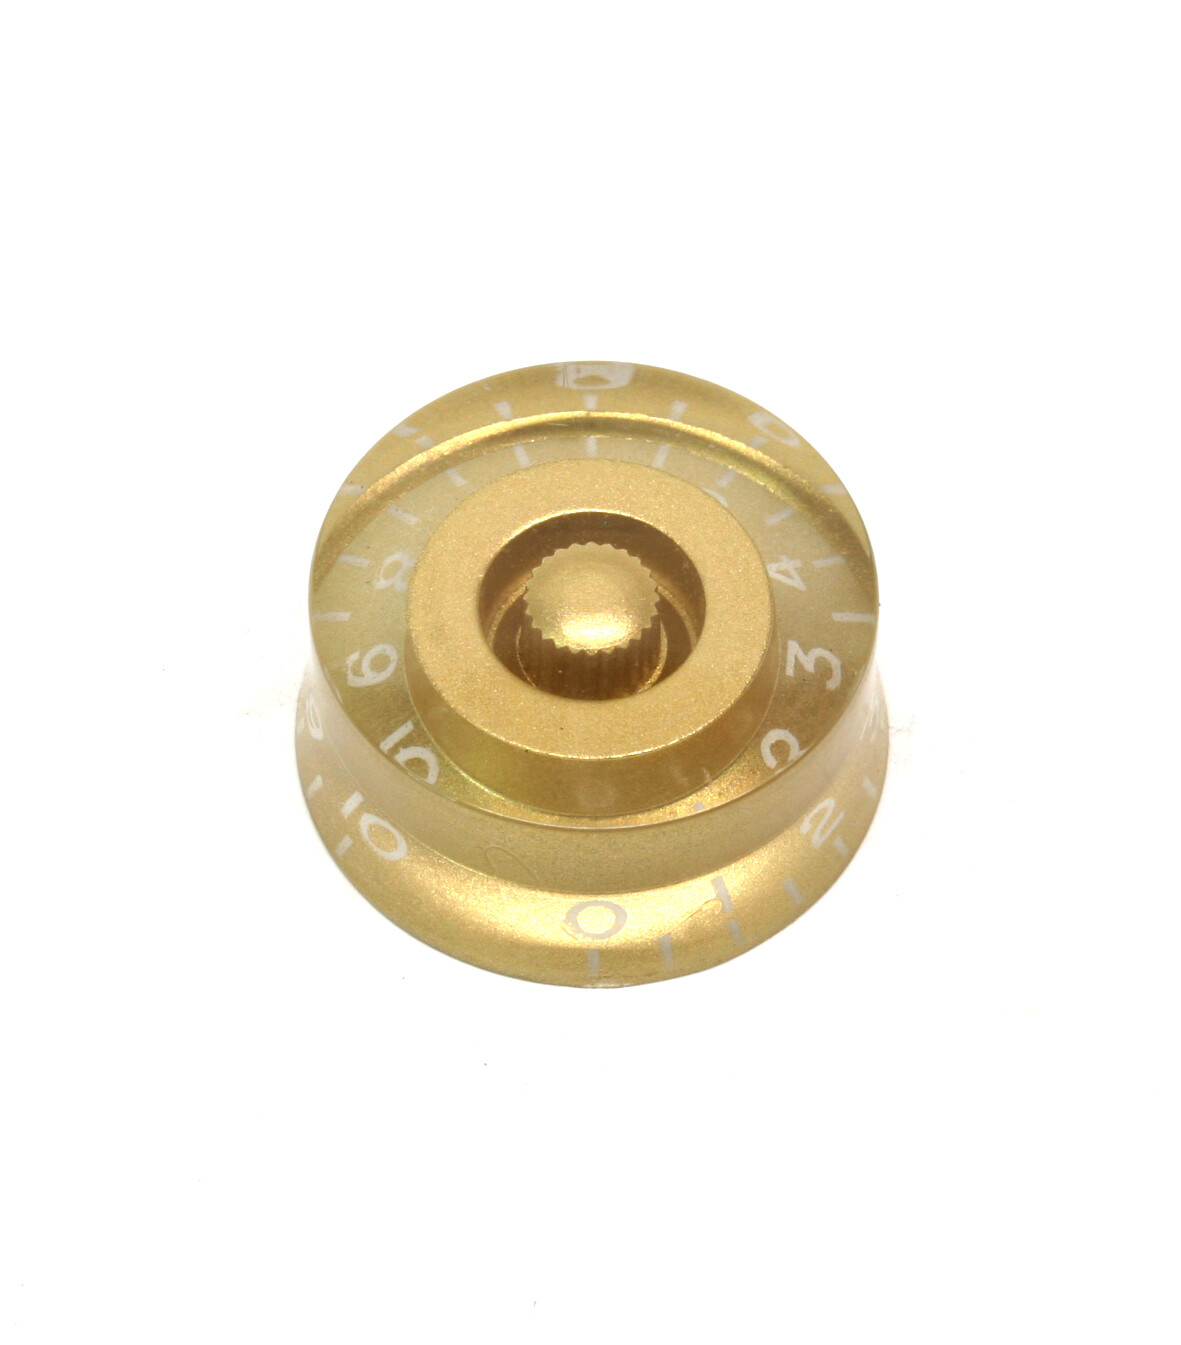 Light Gold Speed knobs vintage style numbers, fits USA split shaft pots.